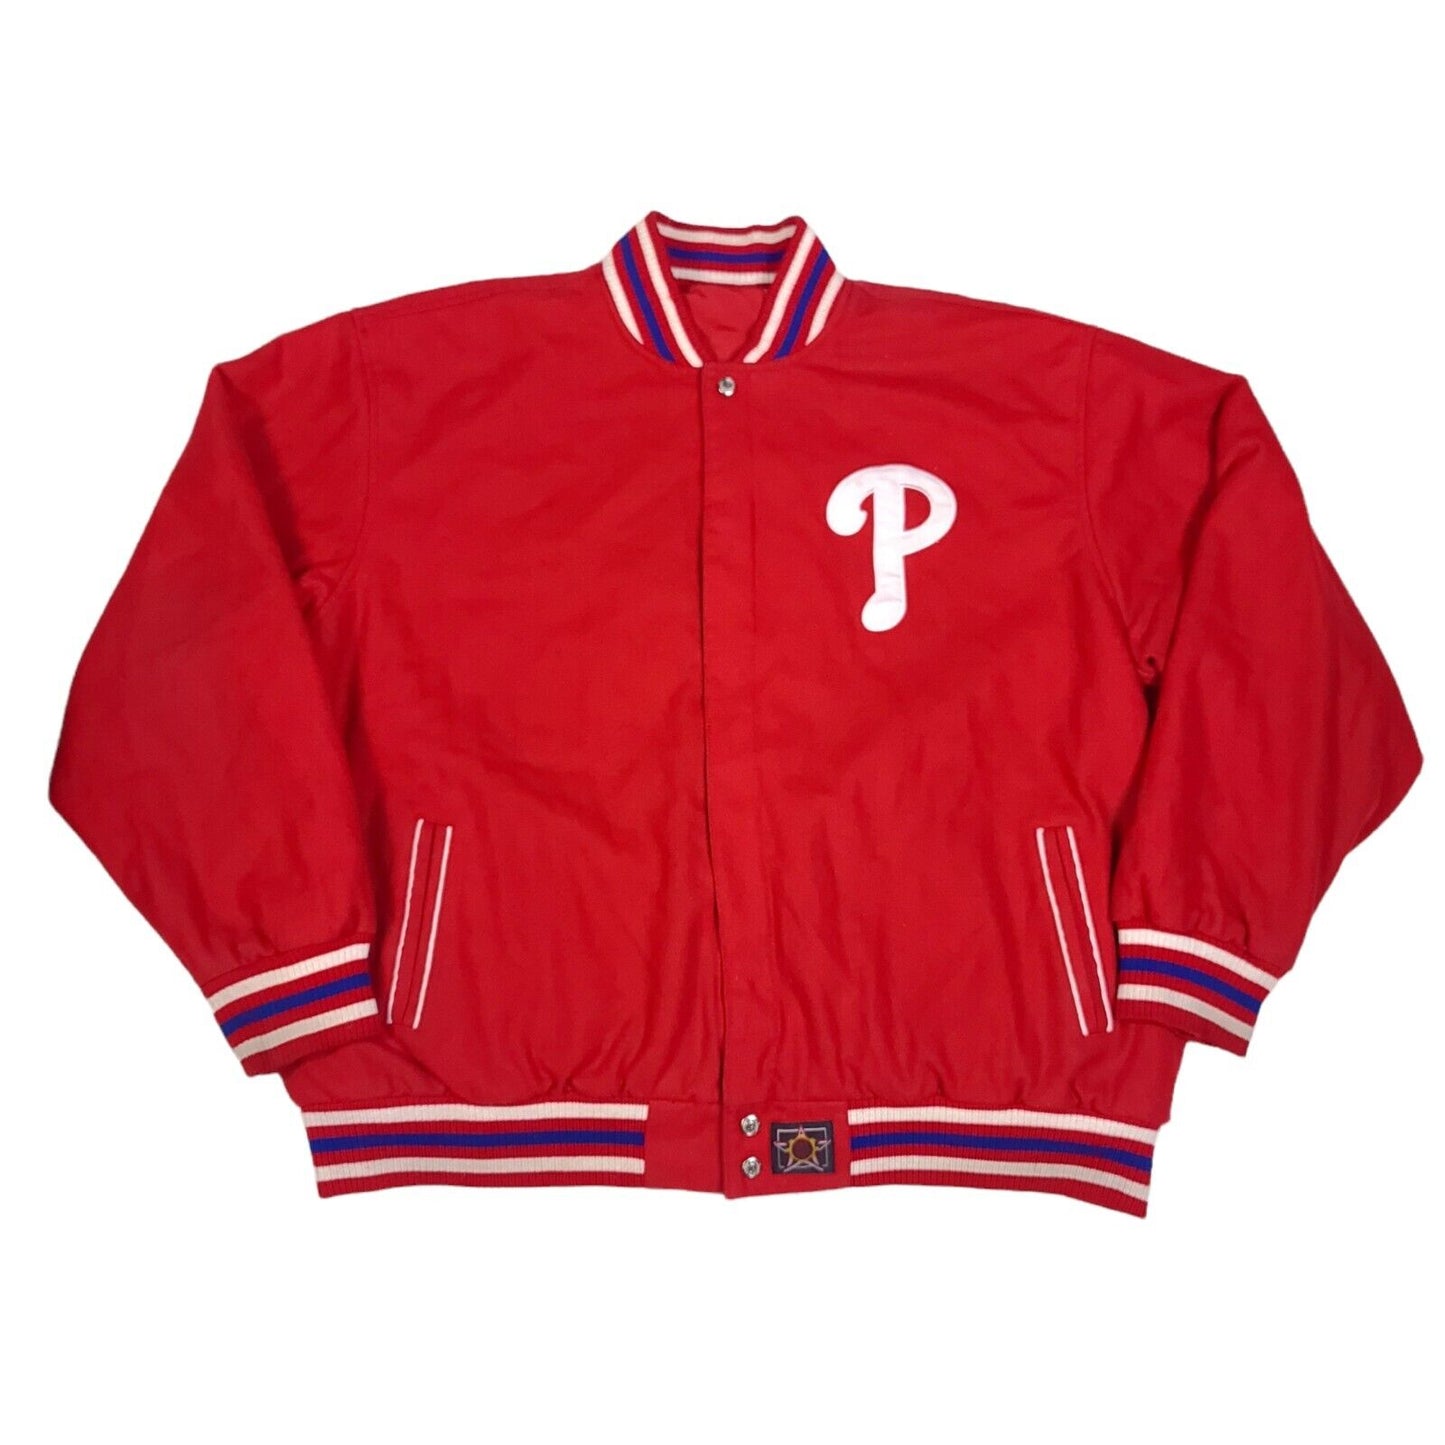 Philadelphia Phillies Reversible Jeff Hamilton Jh Design Coaches Jacket